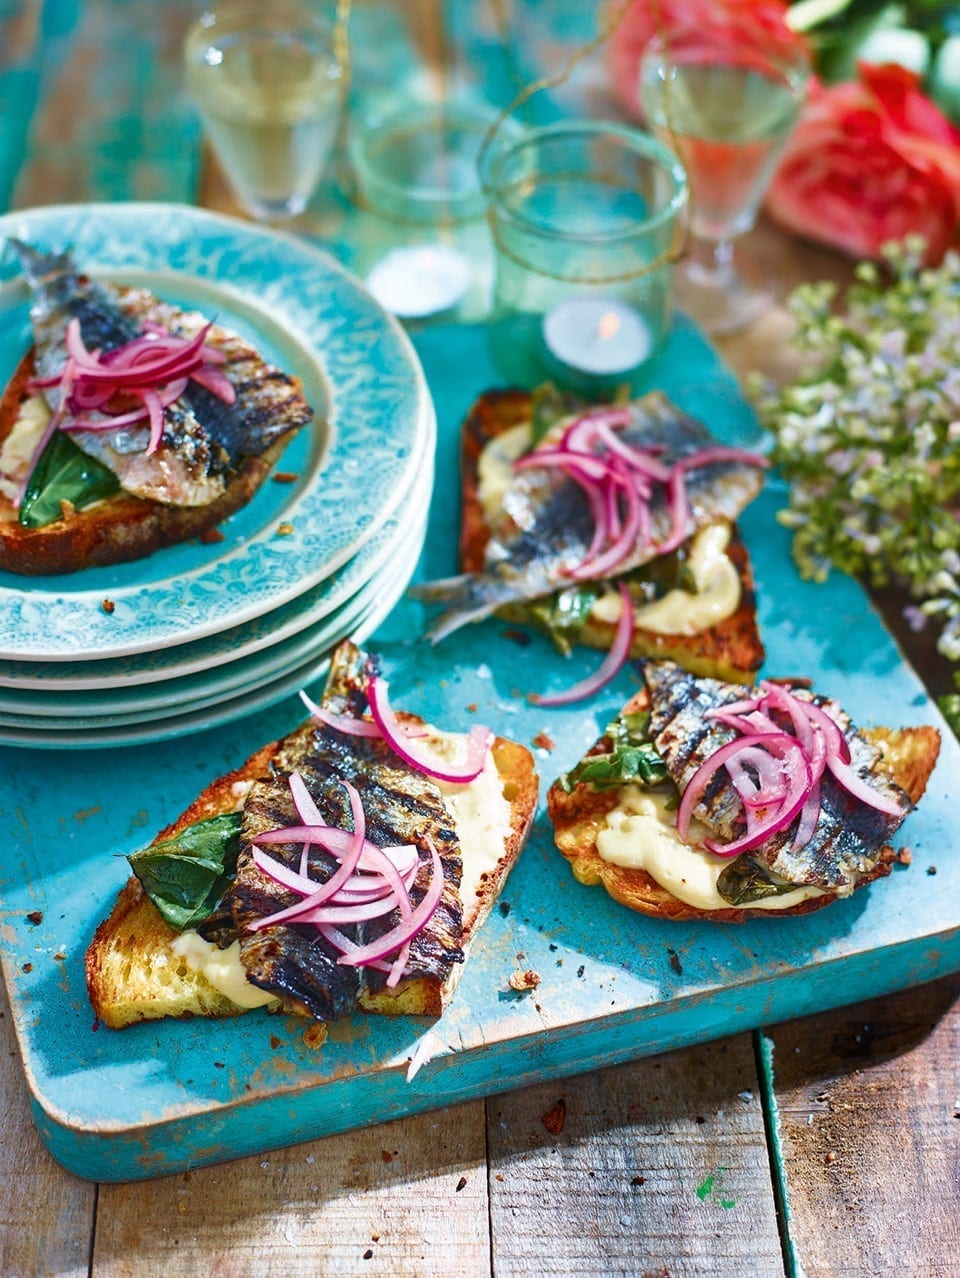 Sardines on toast with sorrel and horseradish alioli recipe | delicious ...